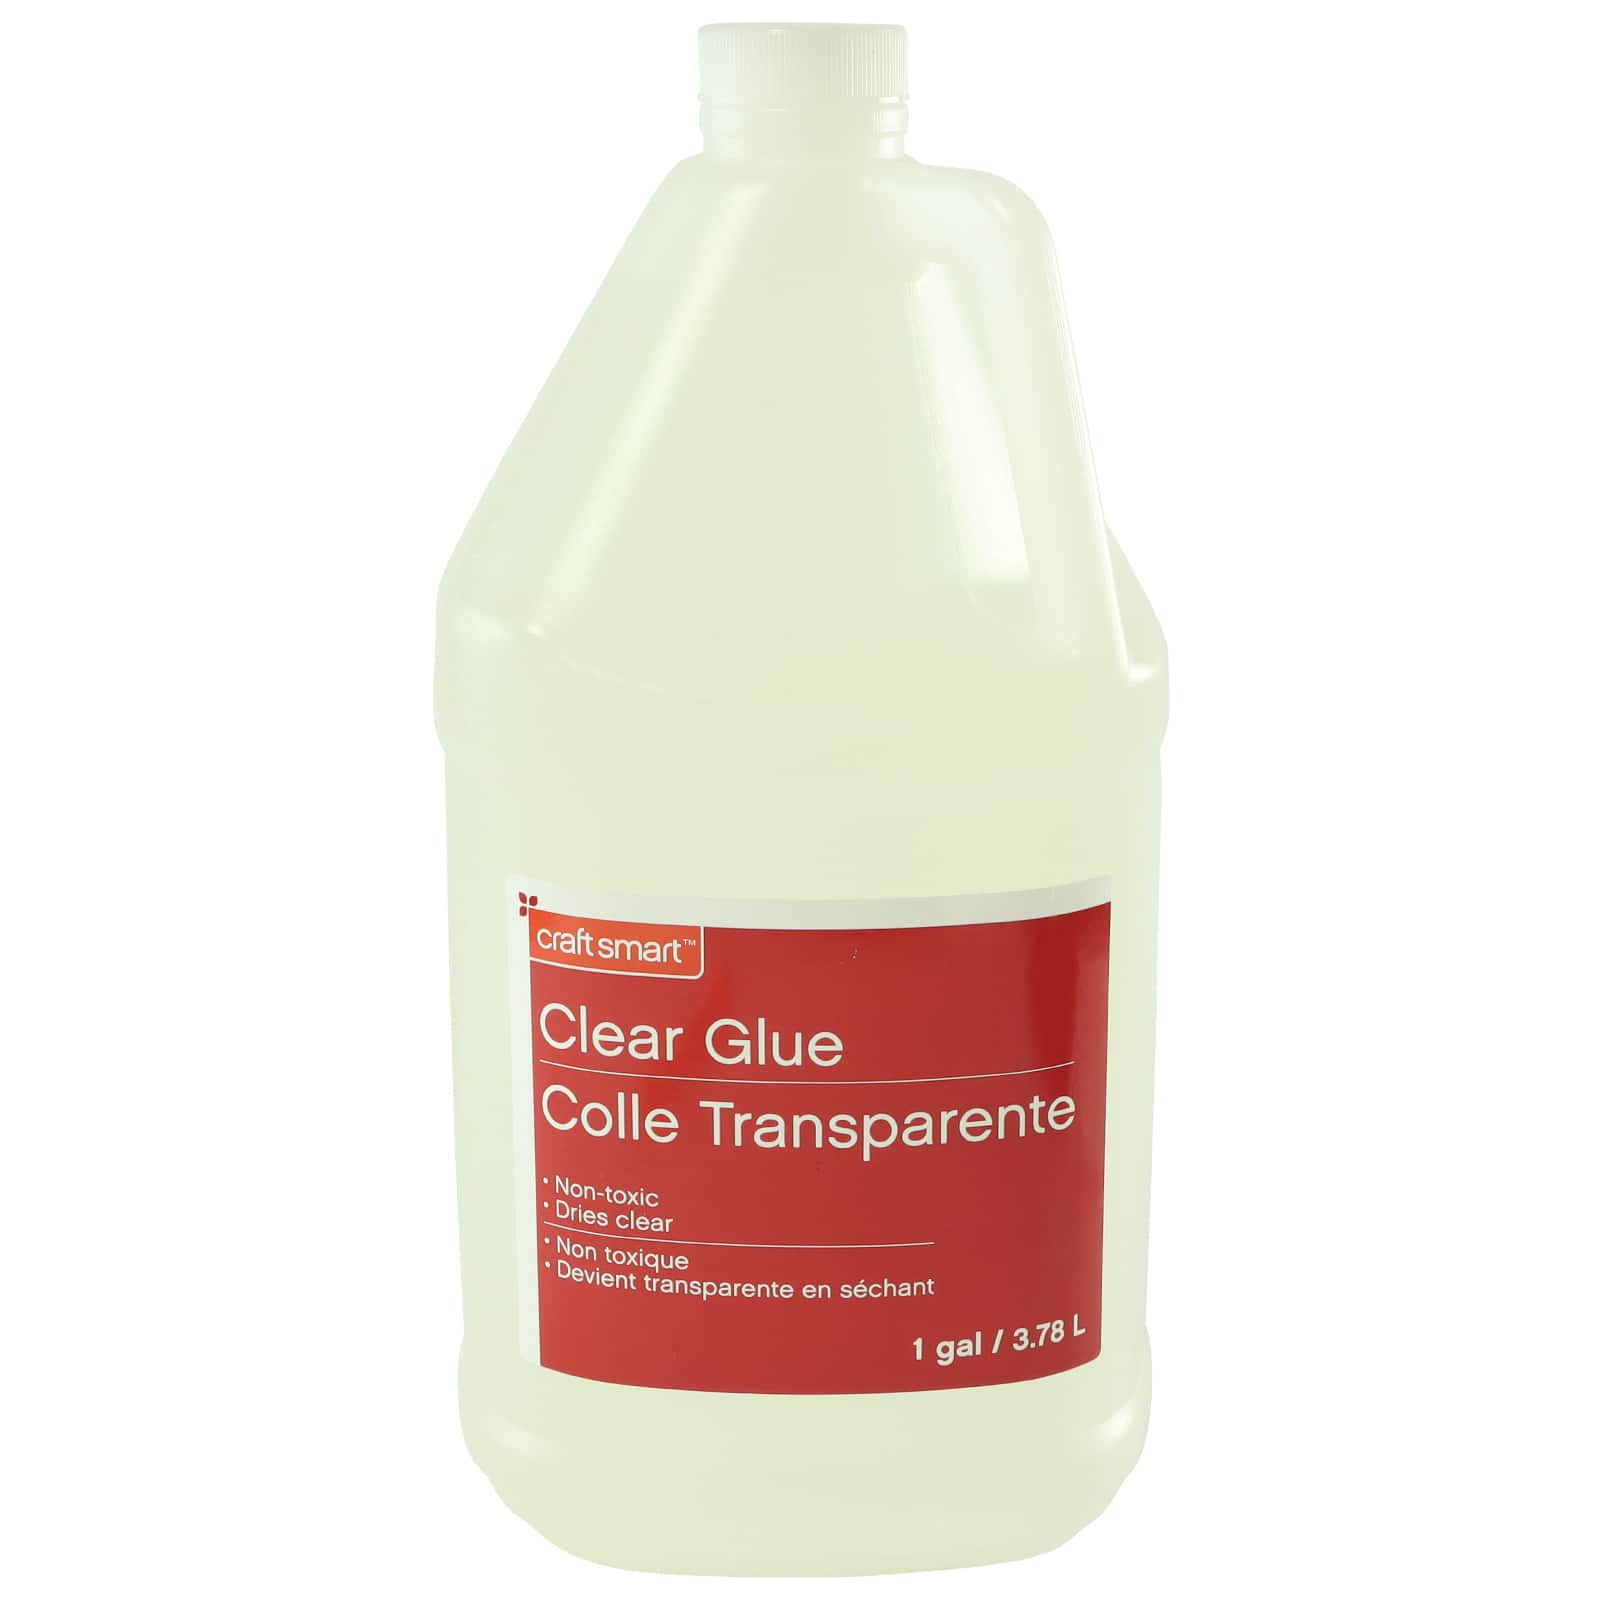 ELMERS CLEAR GLUE GALLON IS TOXIC? Clear glue bottles vs clear